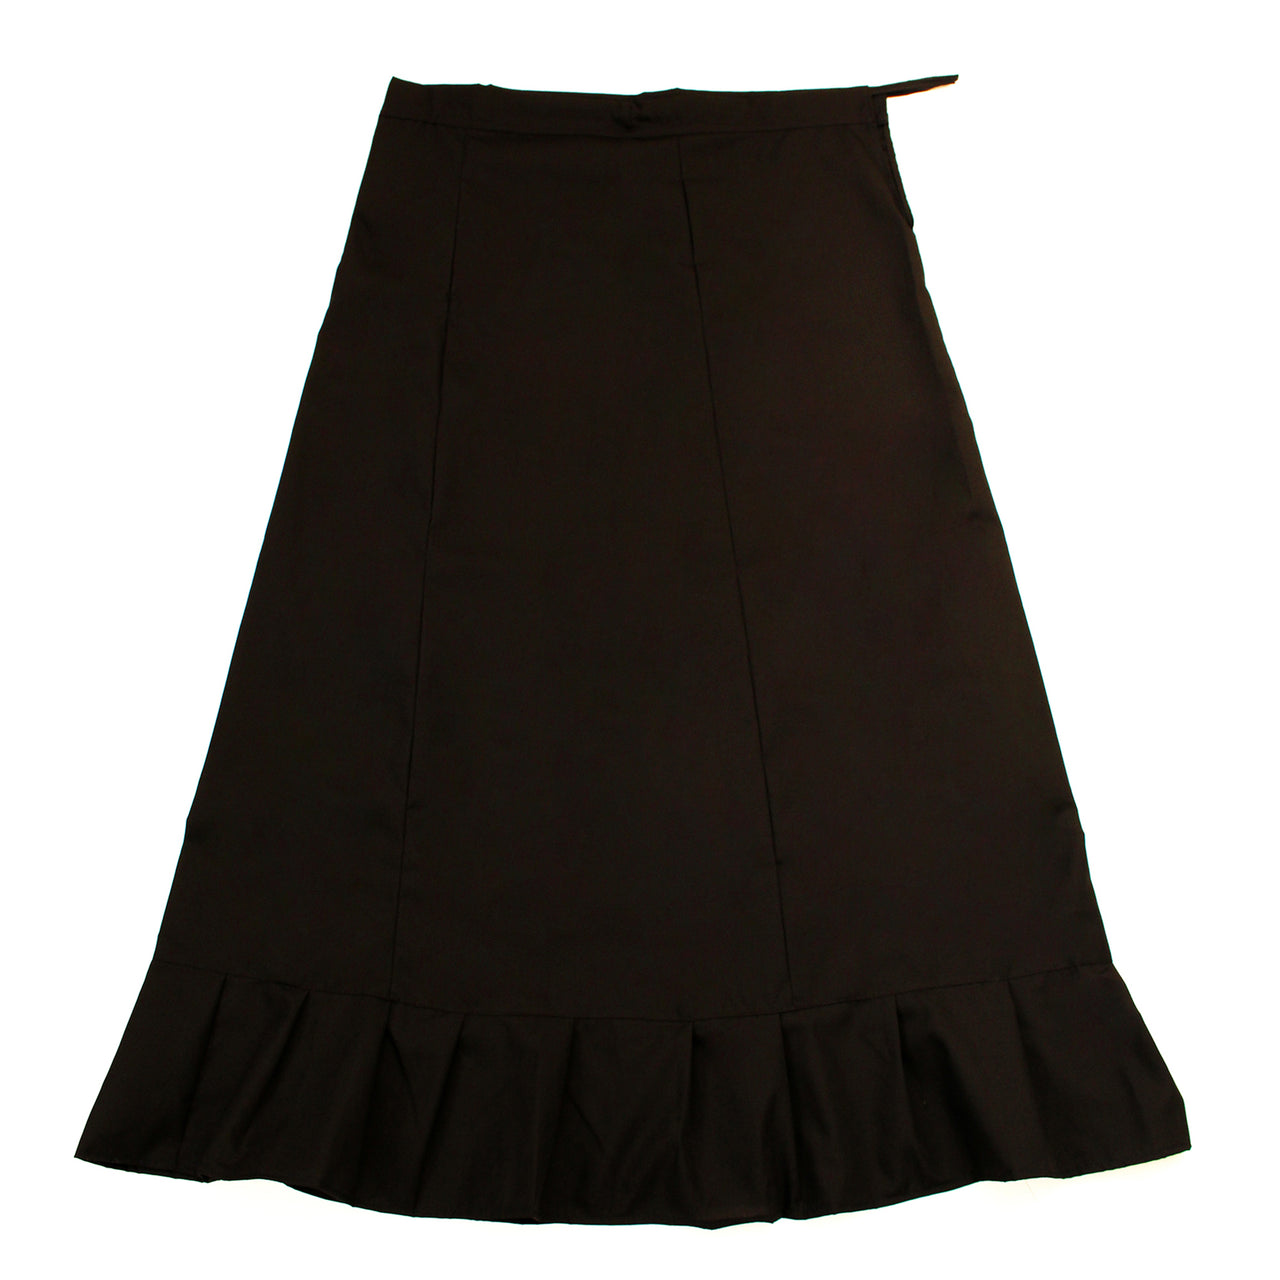 Black - Sari (Saree) Petticoat - Available in S, M, L & XL - Underskirts For Sari's